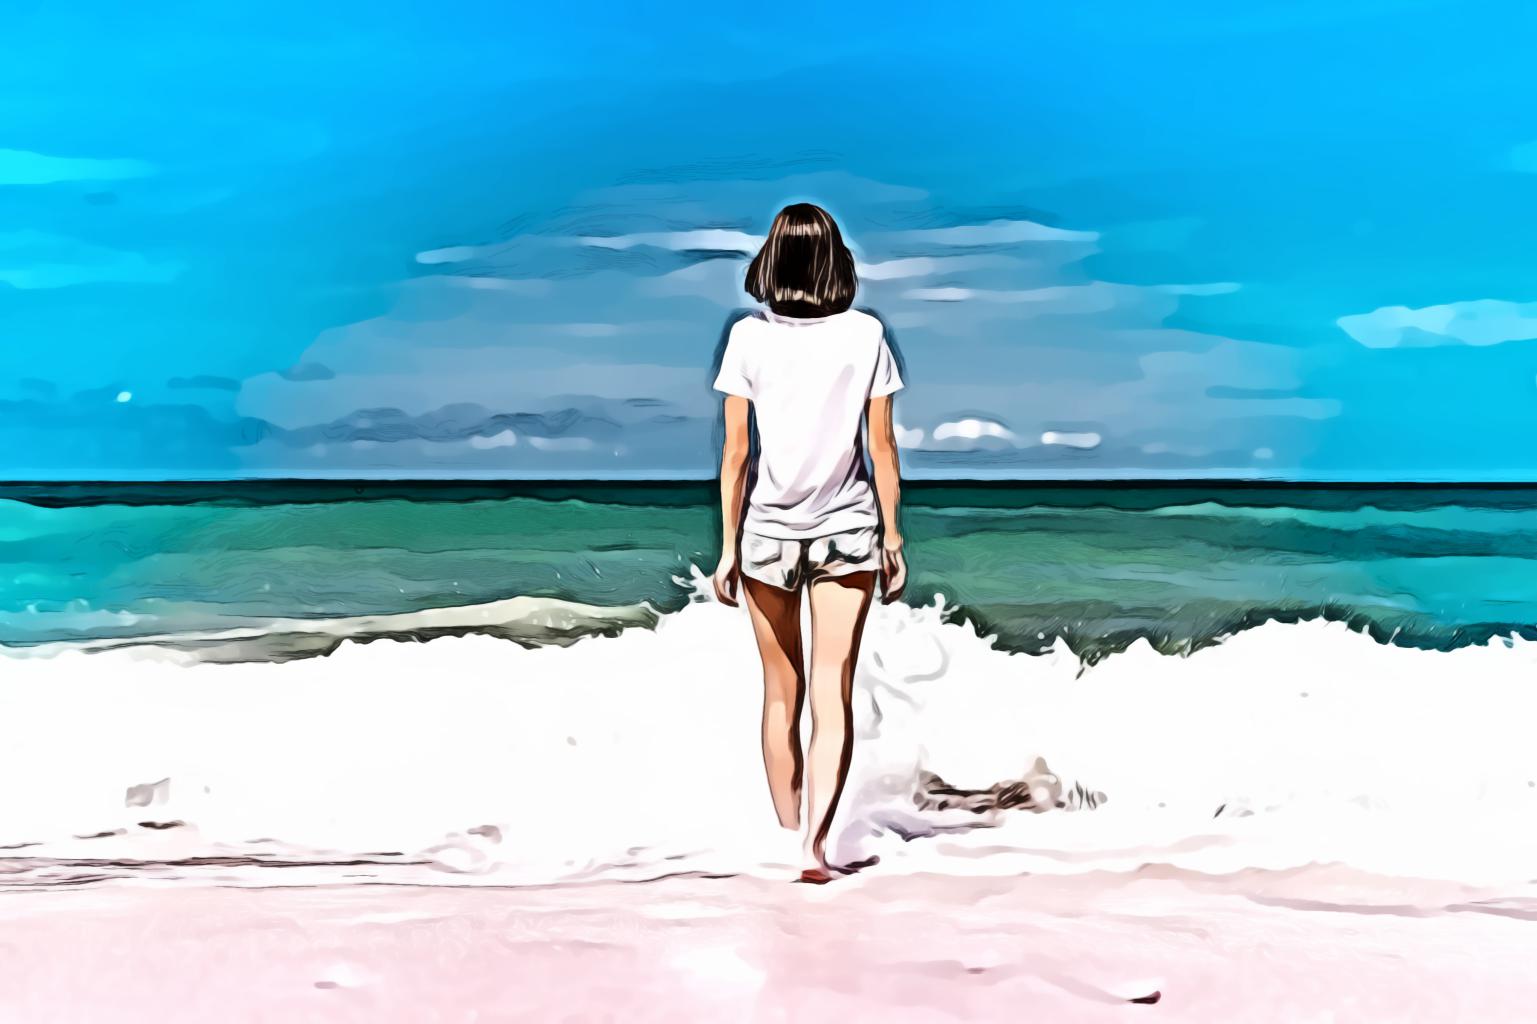 Woman Standing on Seashore